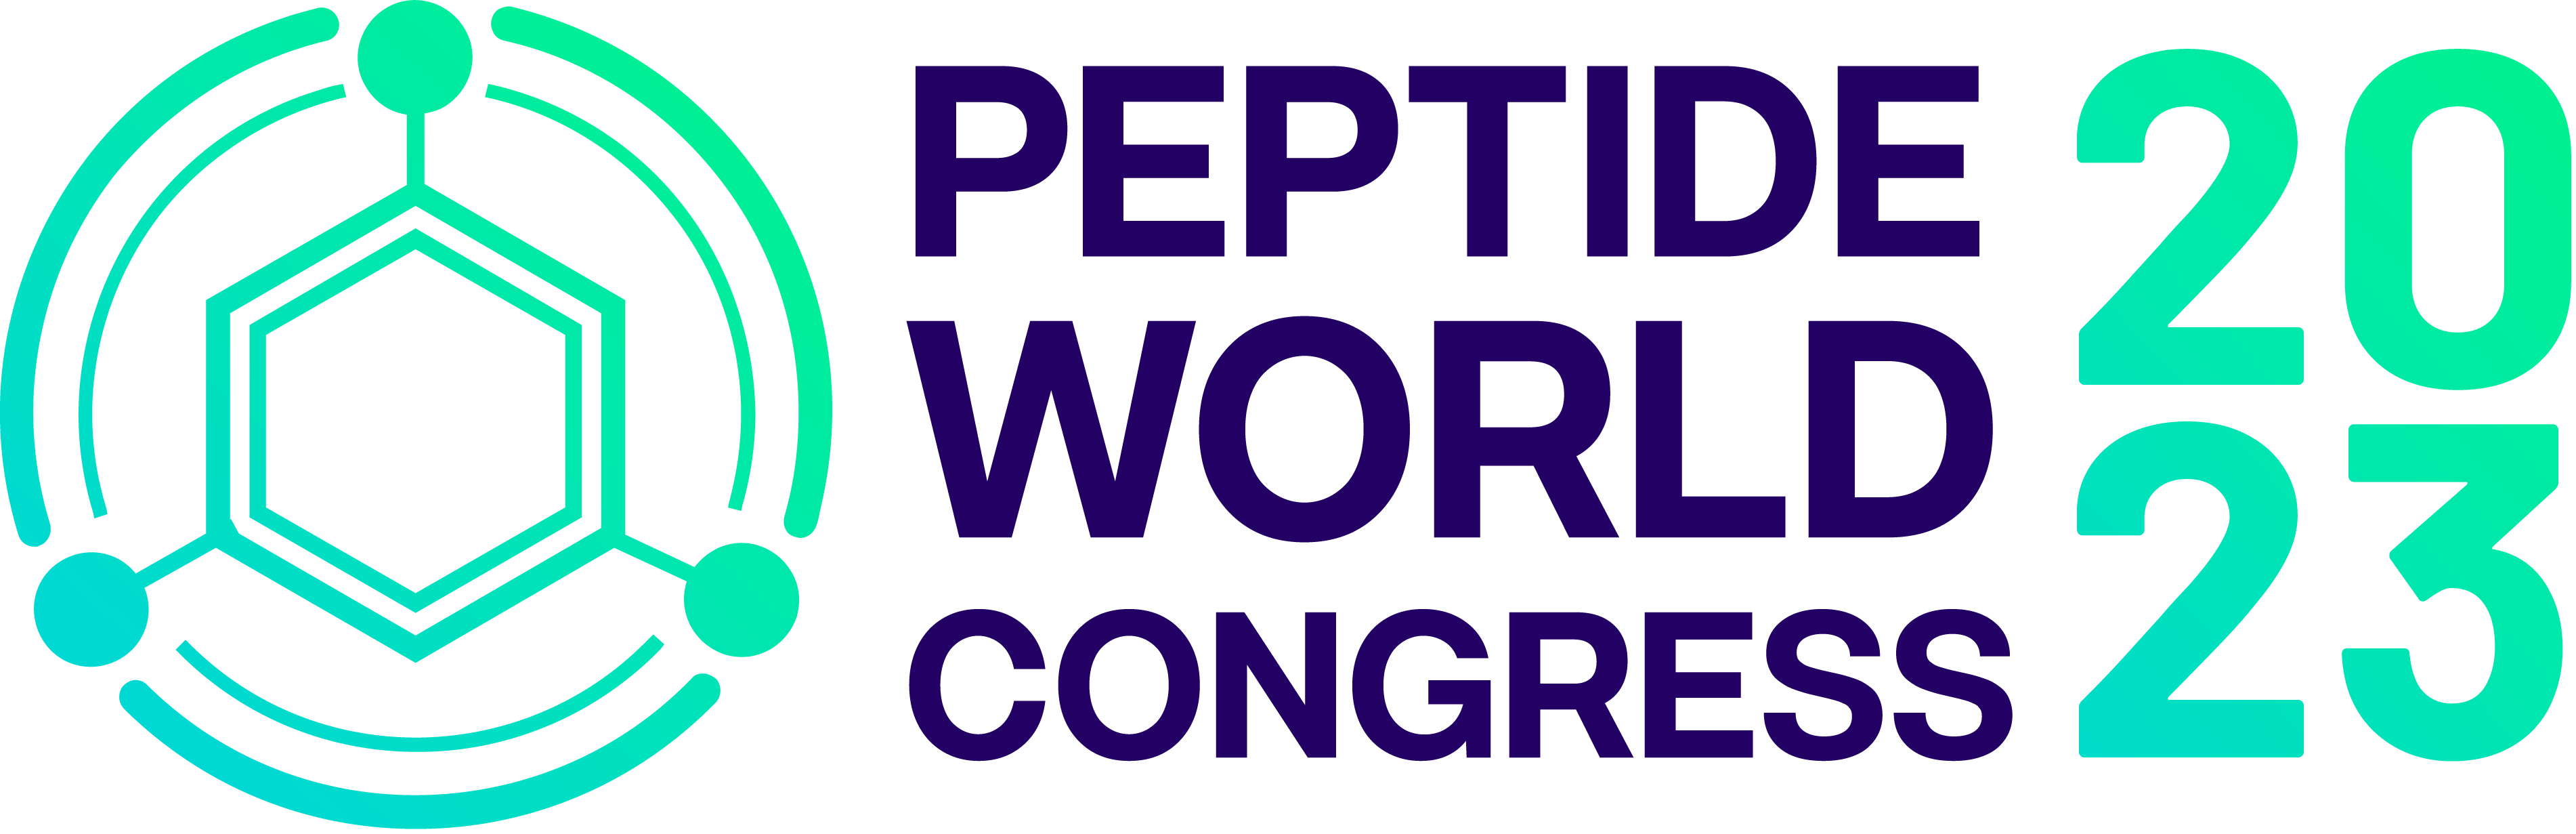 Peptide World Congress